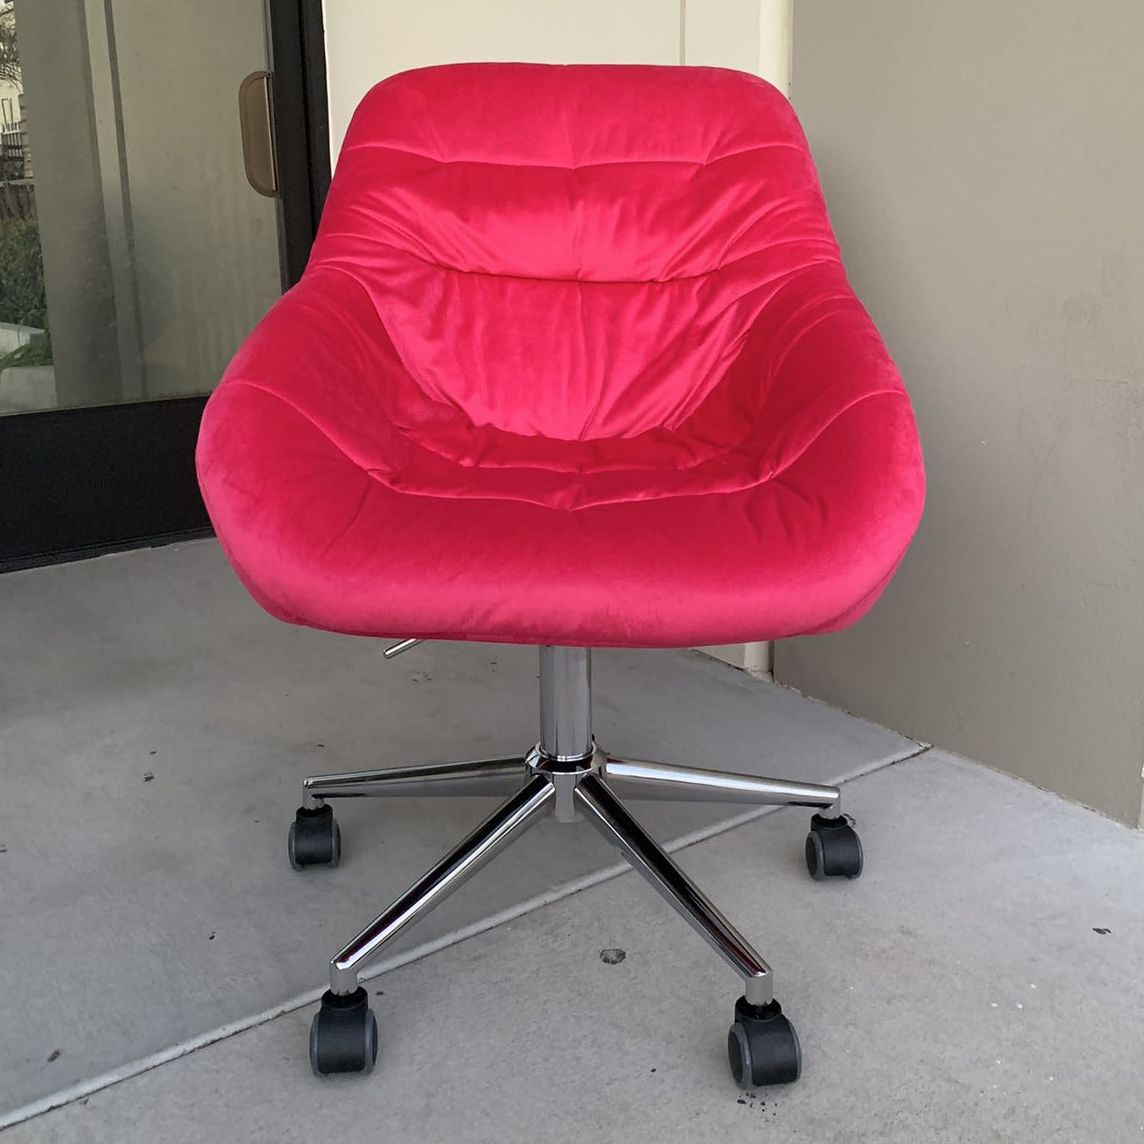 New In Box Velvet Office Computer Vanity Chair Reddish Pink Or Light Blue Color Furniture 